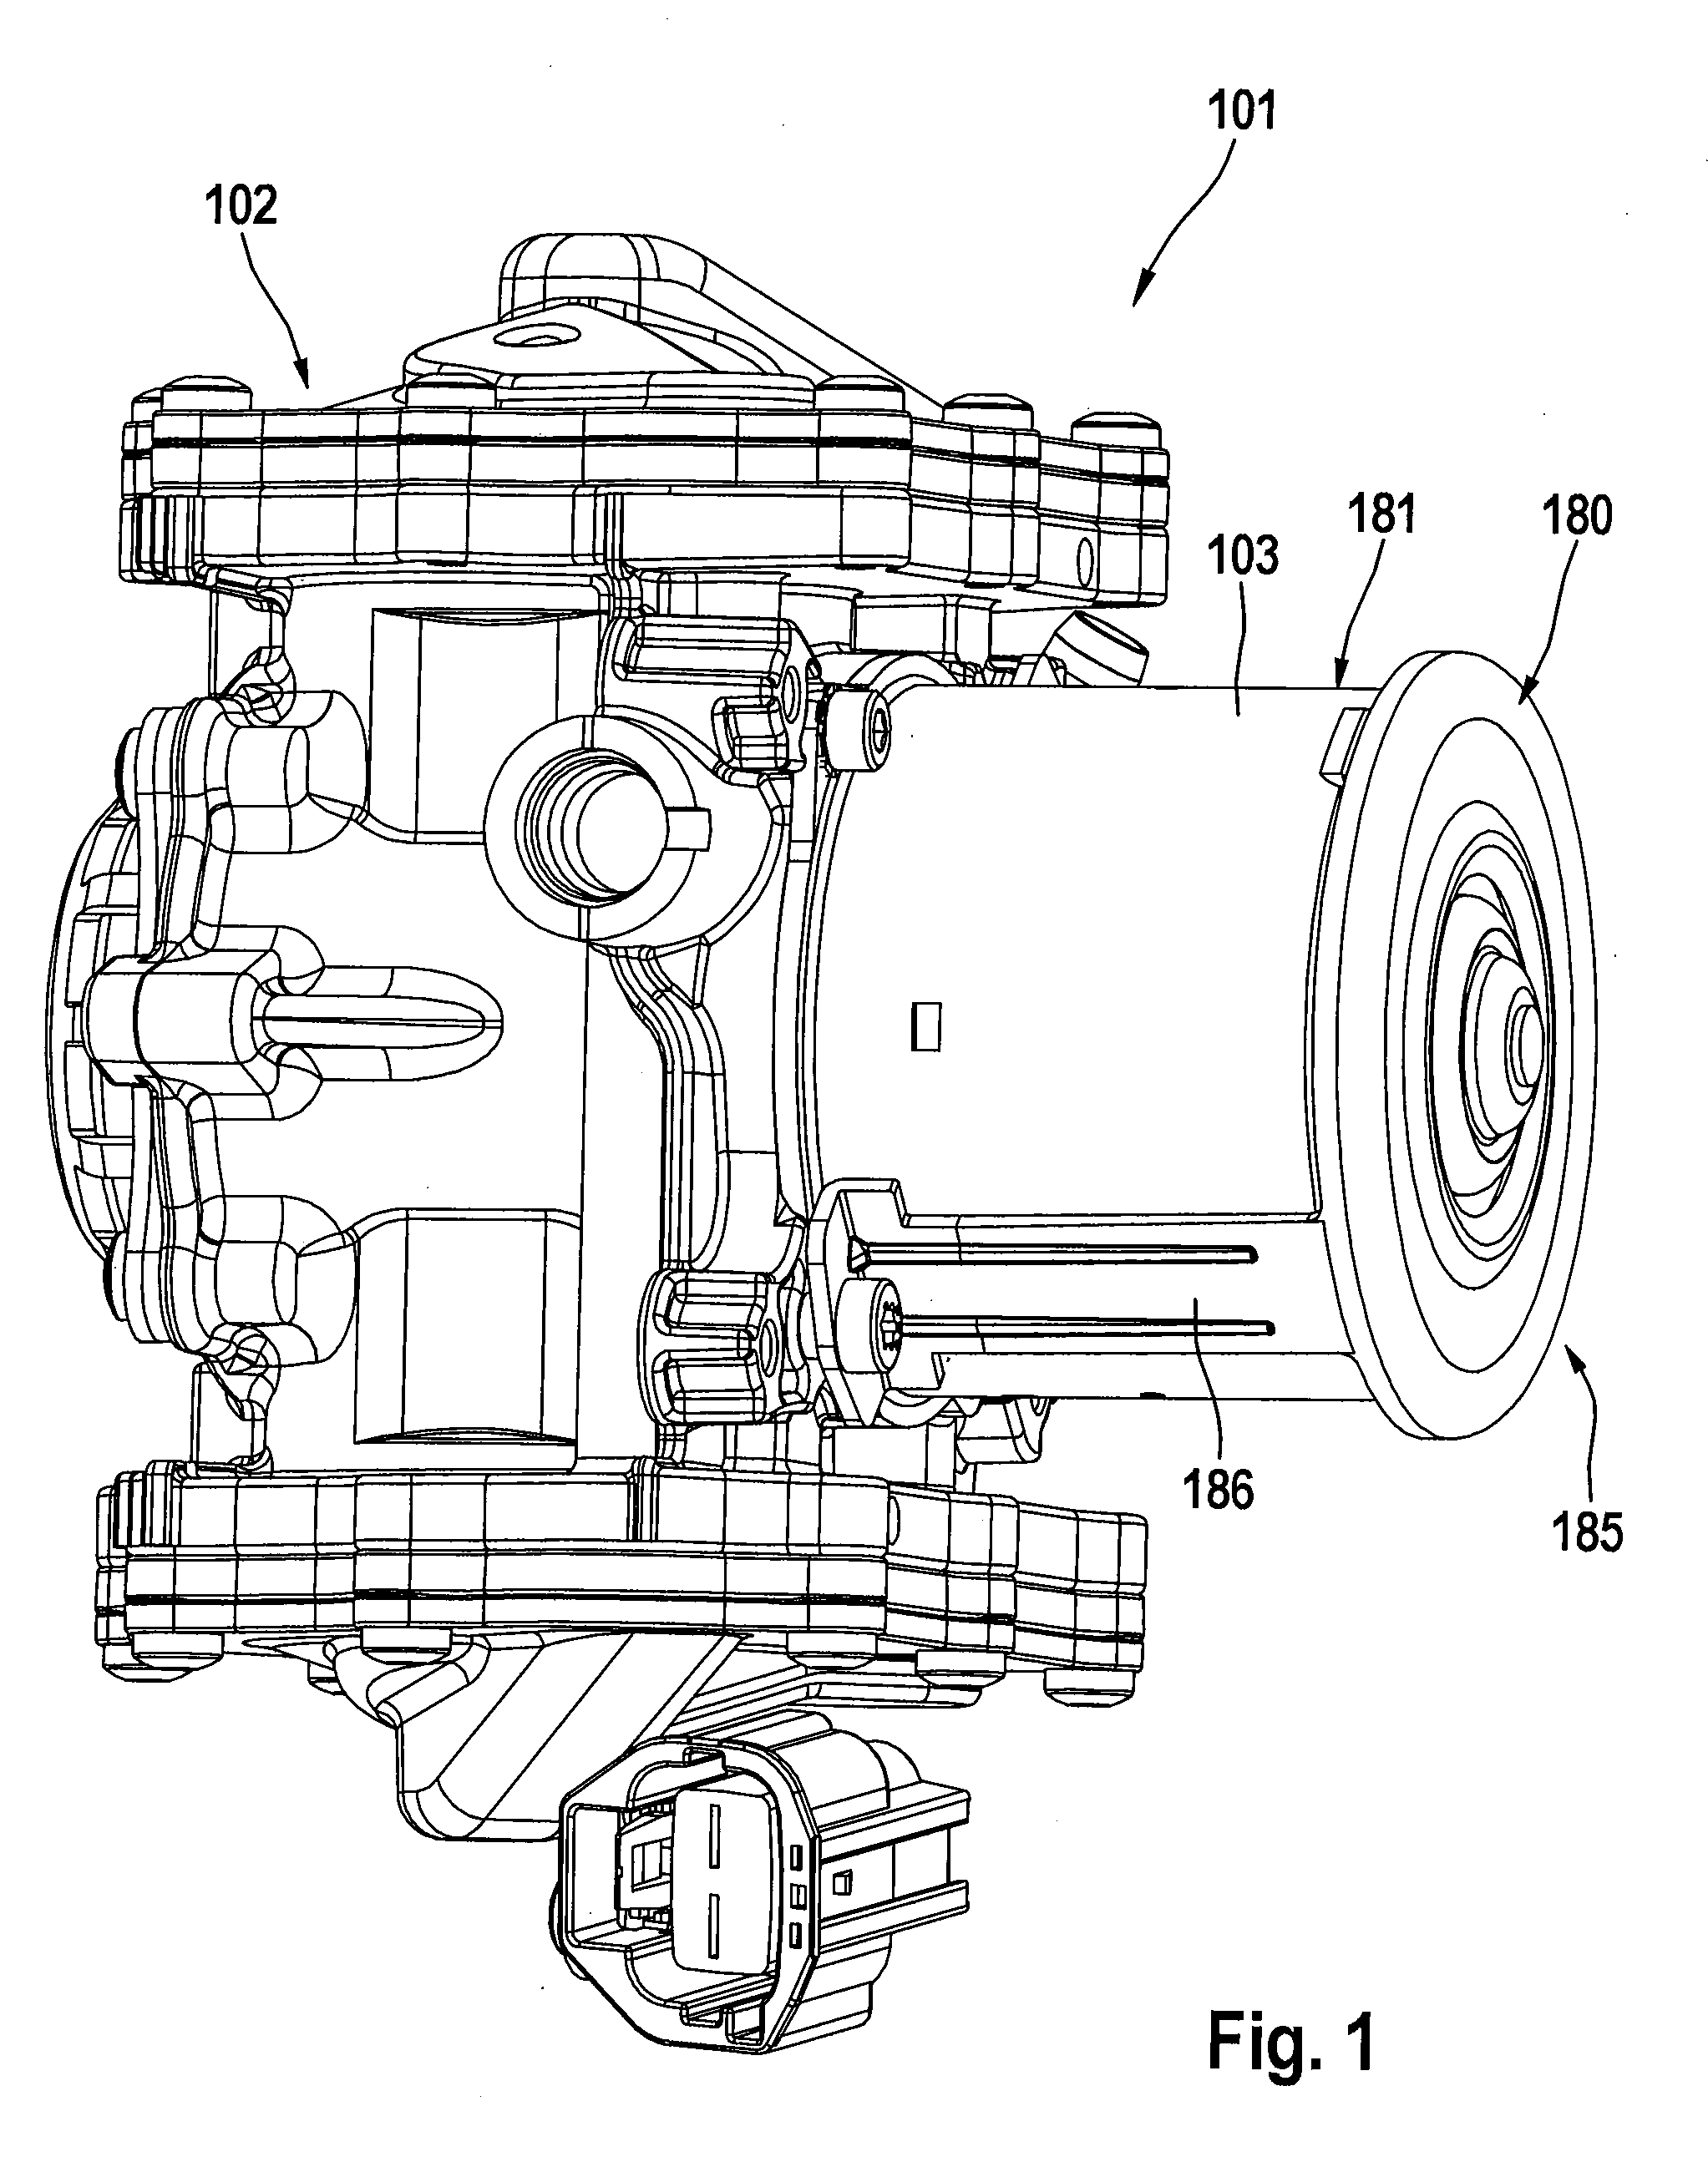 Motor/pump assembly